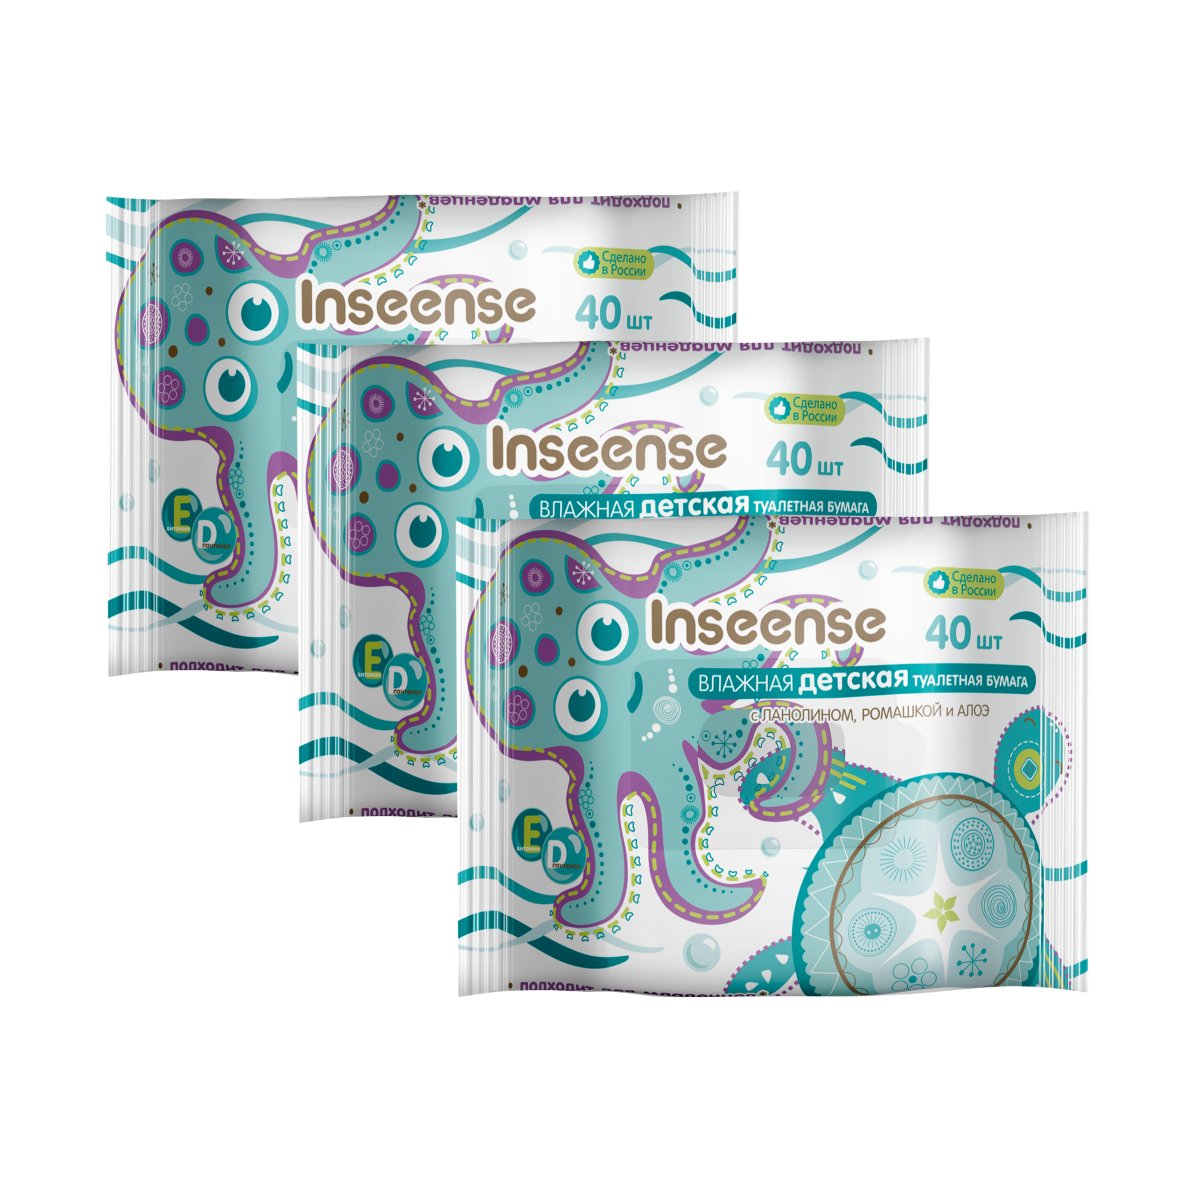 Влажная детская туалетная бумага Inseense 40 шт упаковка 3 шт